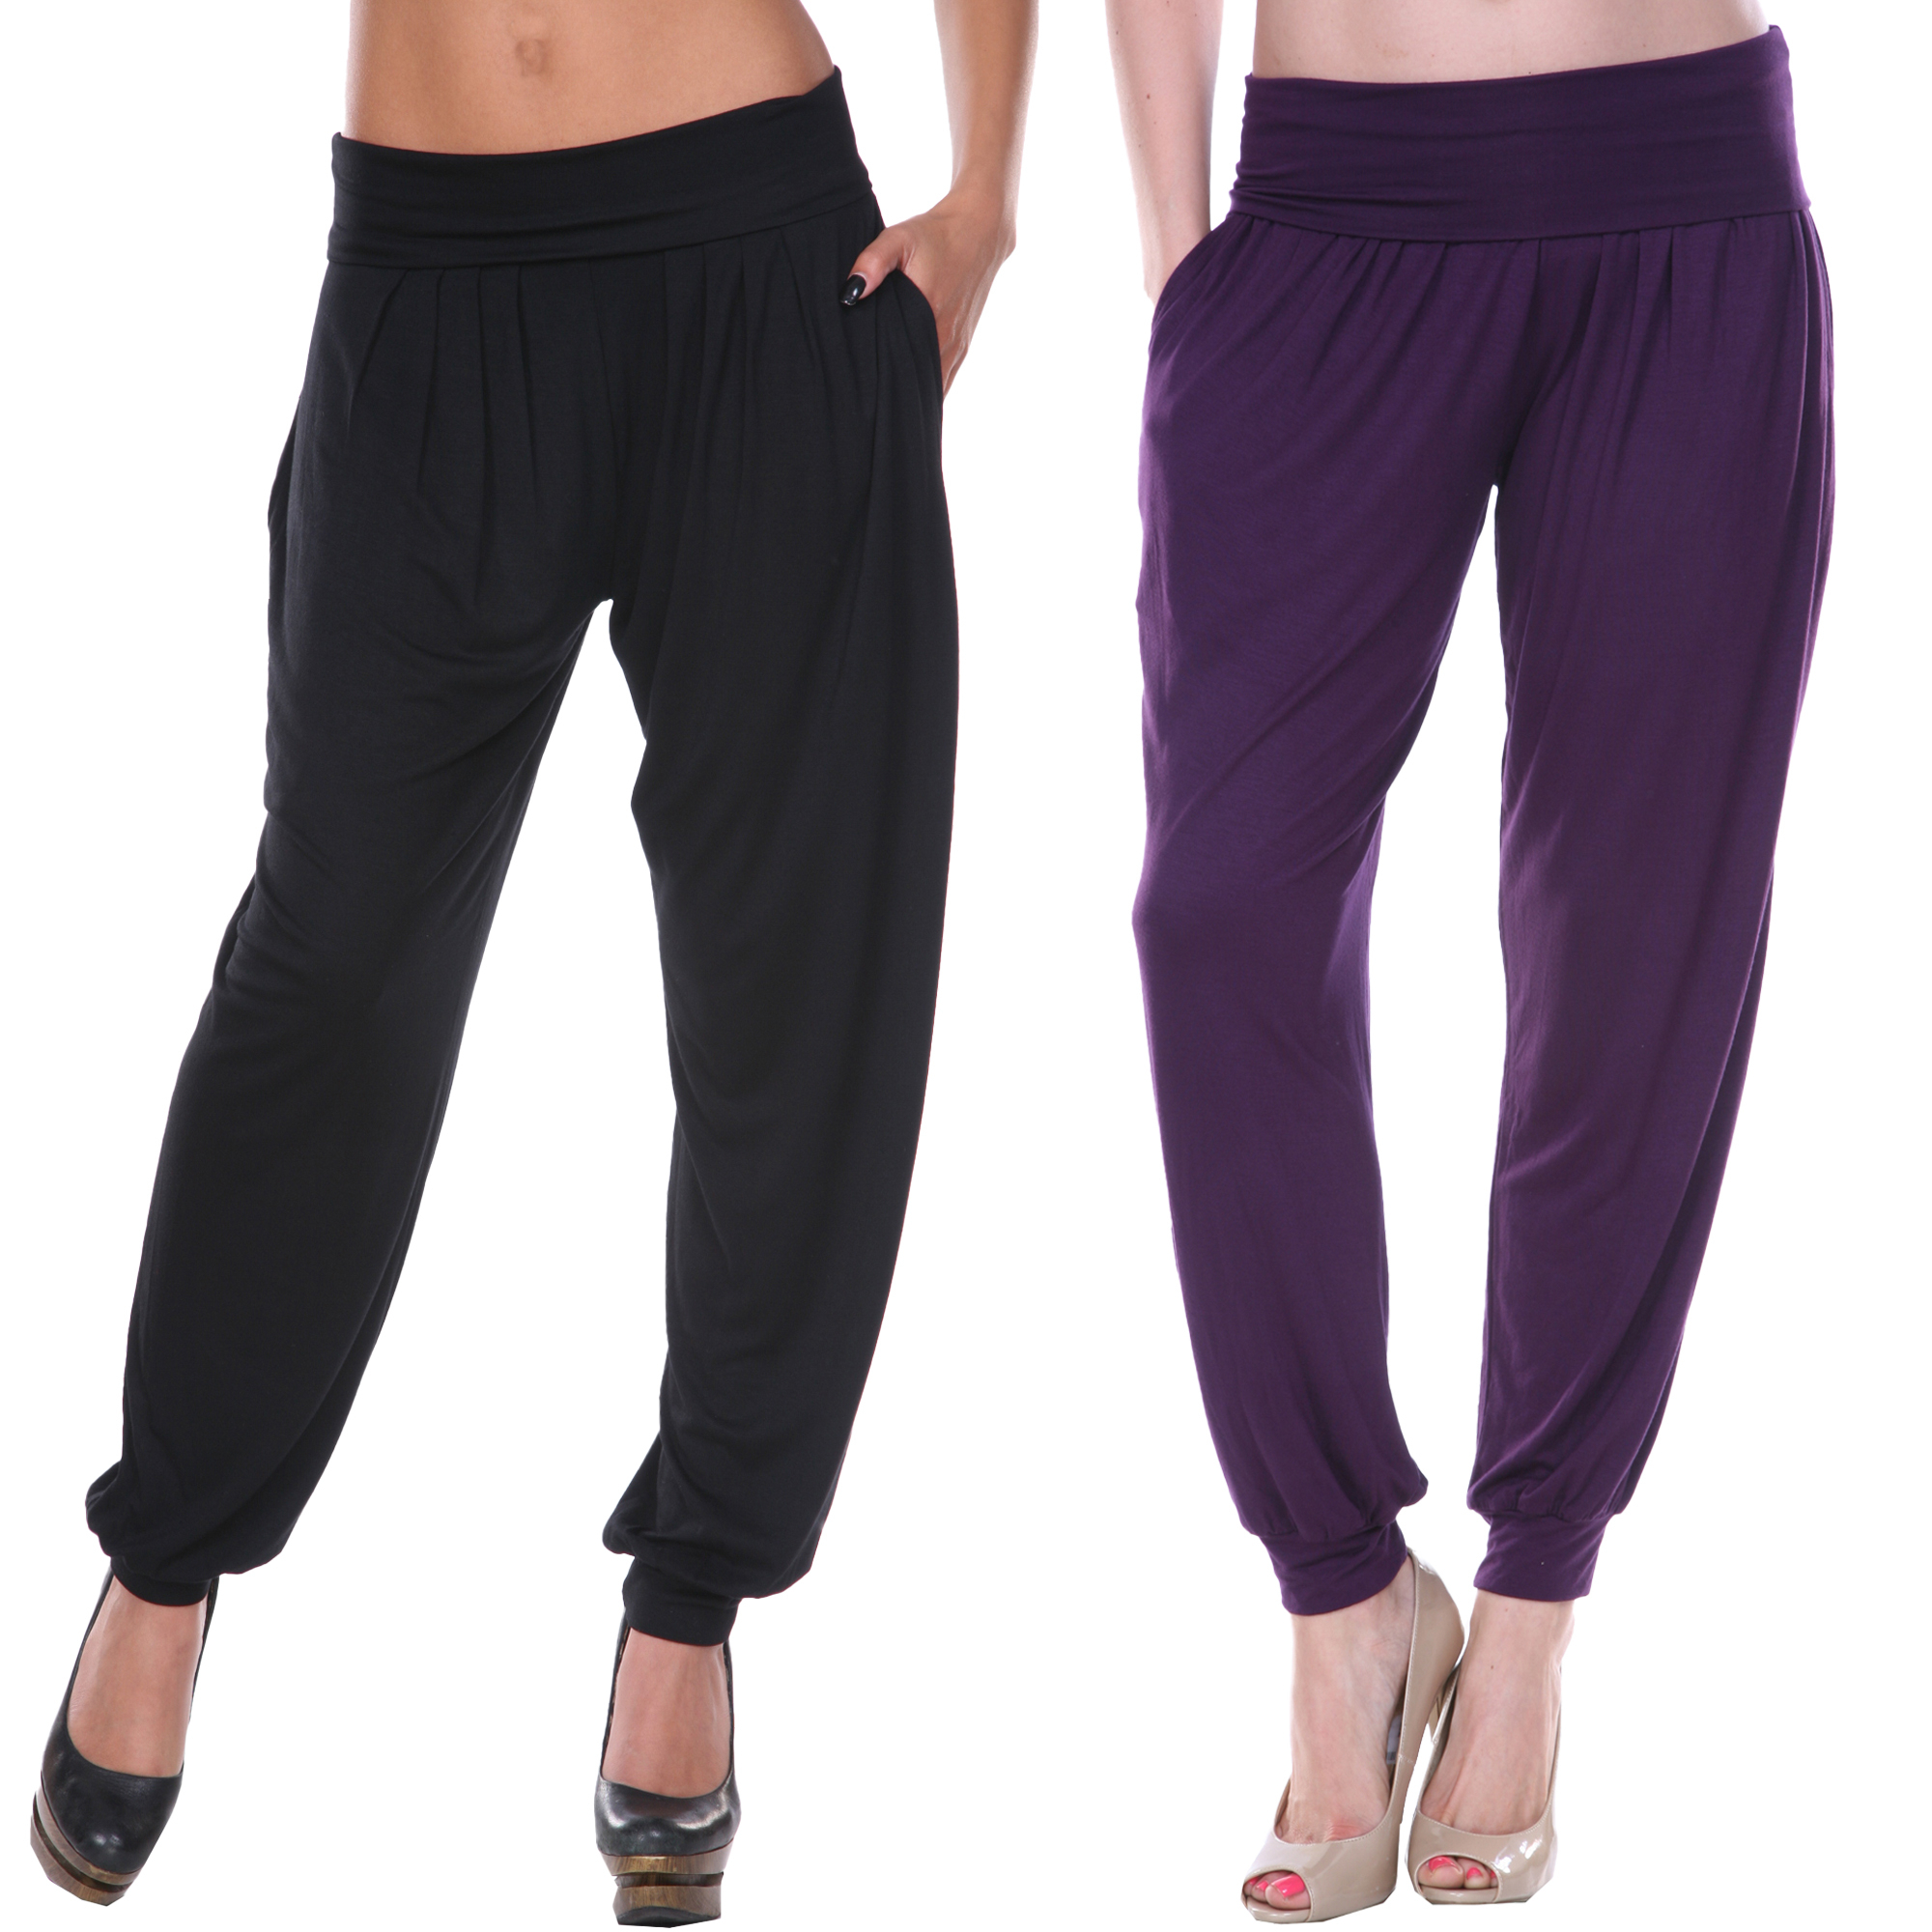 White Mark Women's 2-Pack High Waist Harem Pants - Black, Purple, Medium